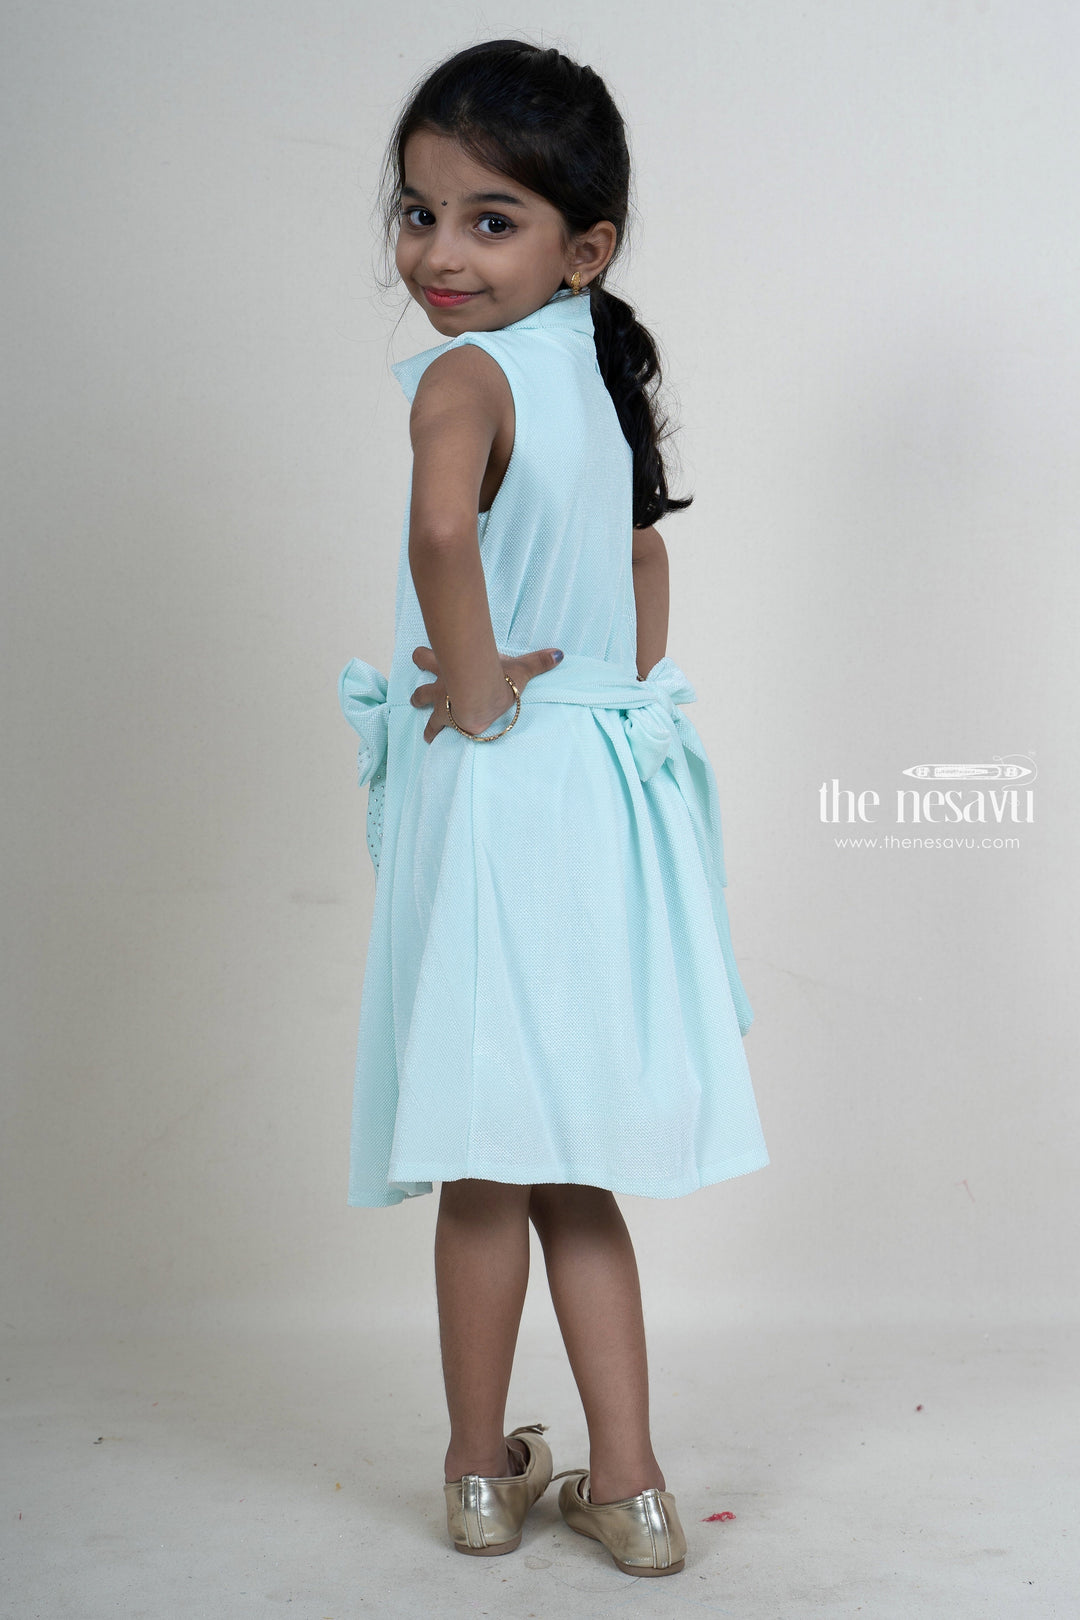 The Nesavu Baby Frock / Jhabla Skyblue Velvet Designer Bow Embellished Party Wear Dresses For Girls psr silks Nesavu